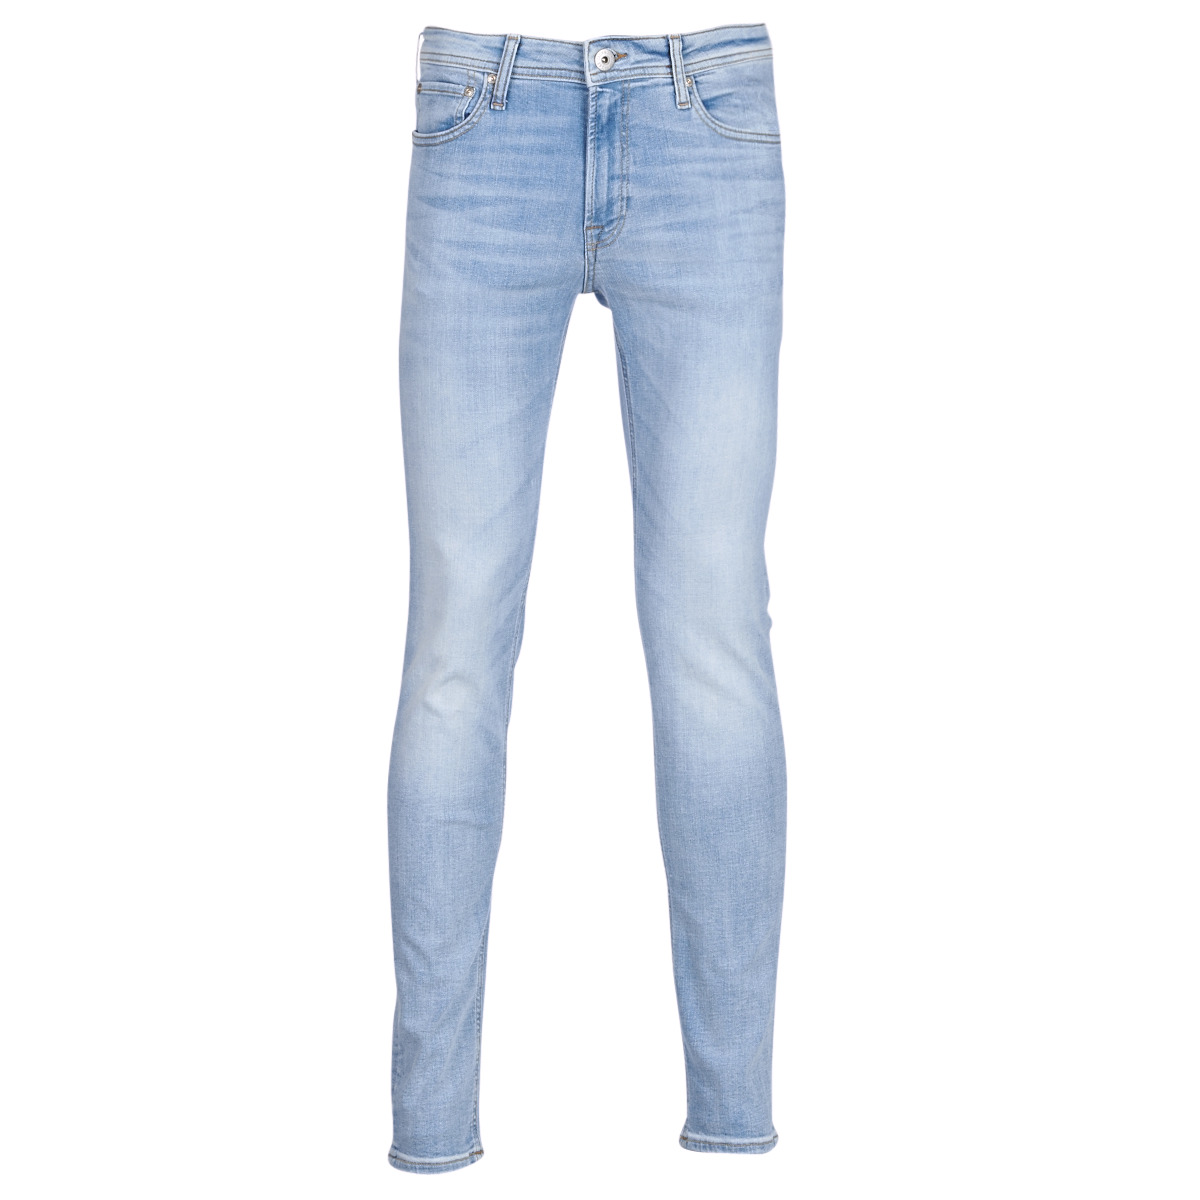 Clothing Men slim jeans Jack & Jones JJILIAM Blue